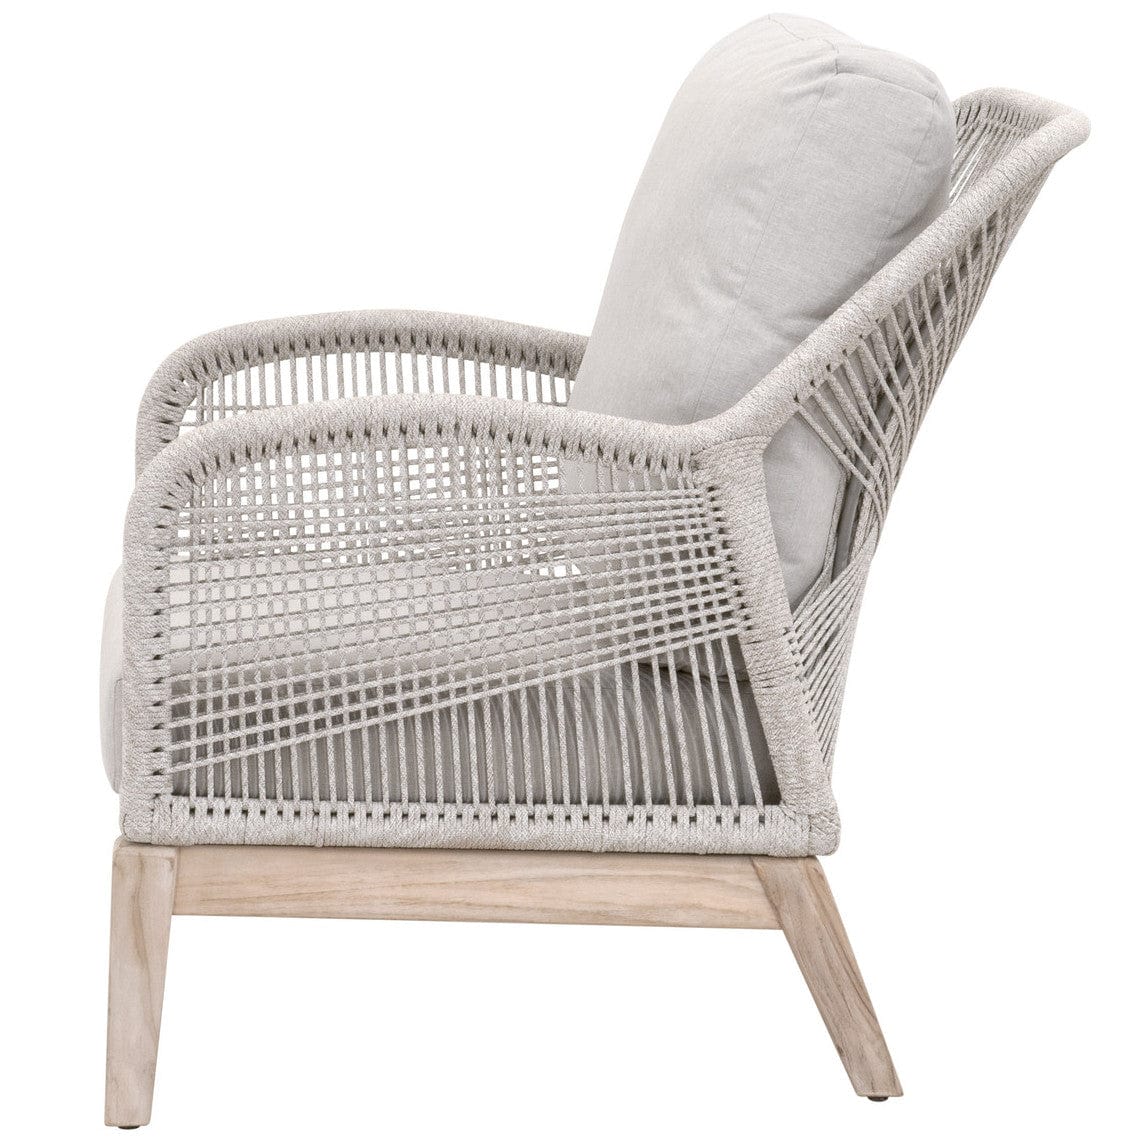 BLU Home Loom Outdoor Club Chair Furniture